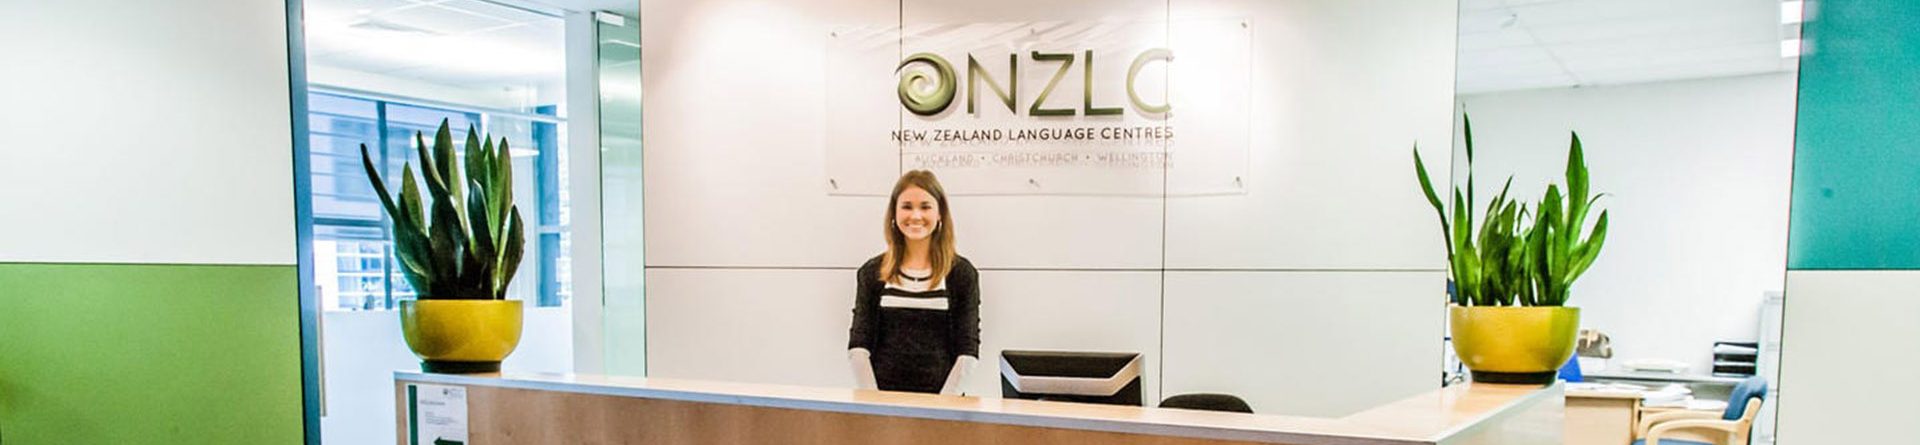 NZLC открывает новый кампус